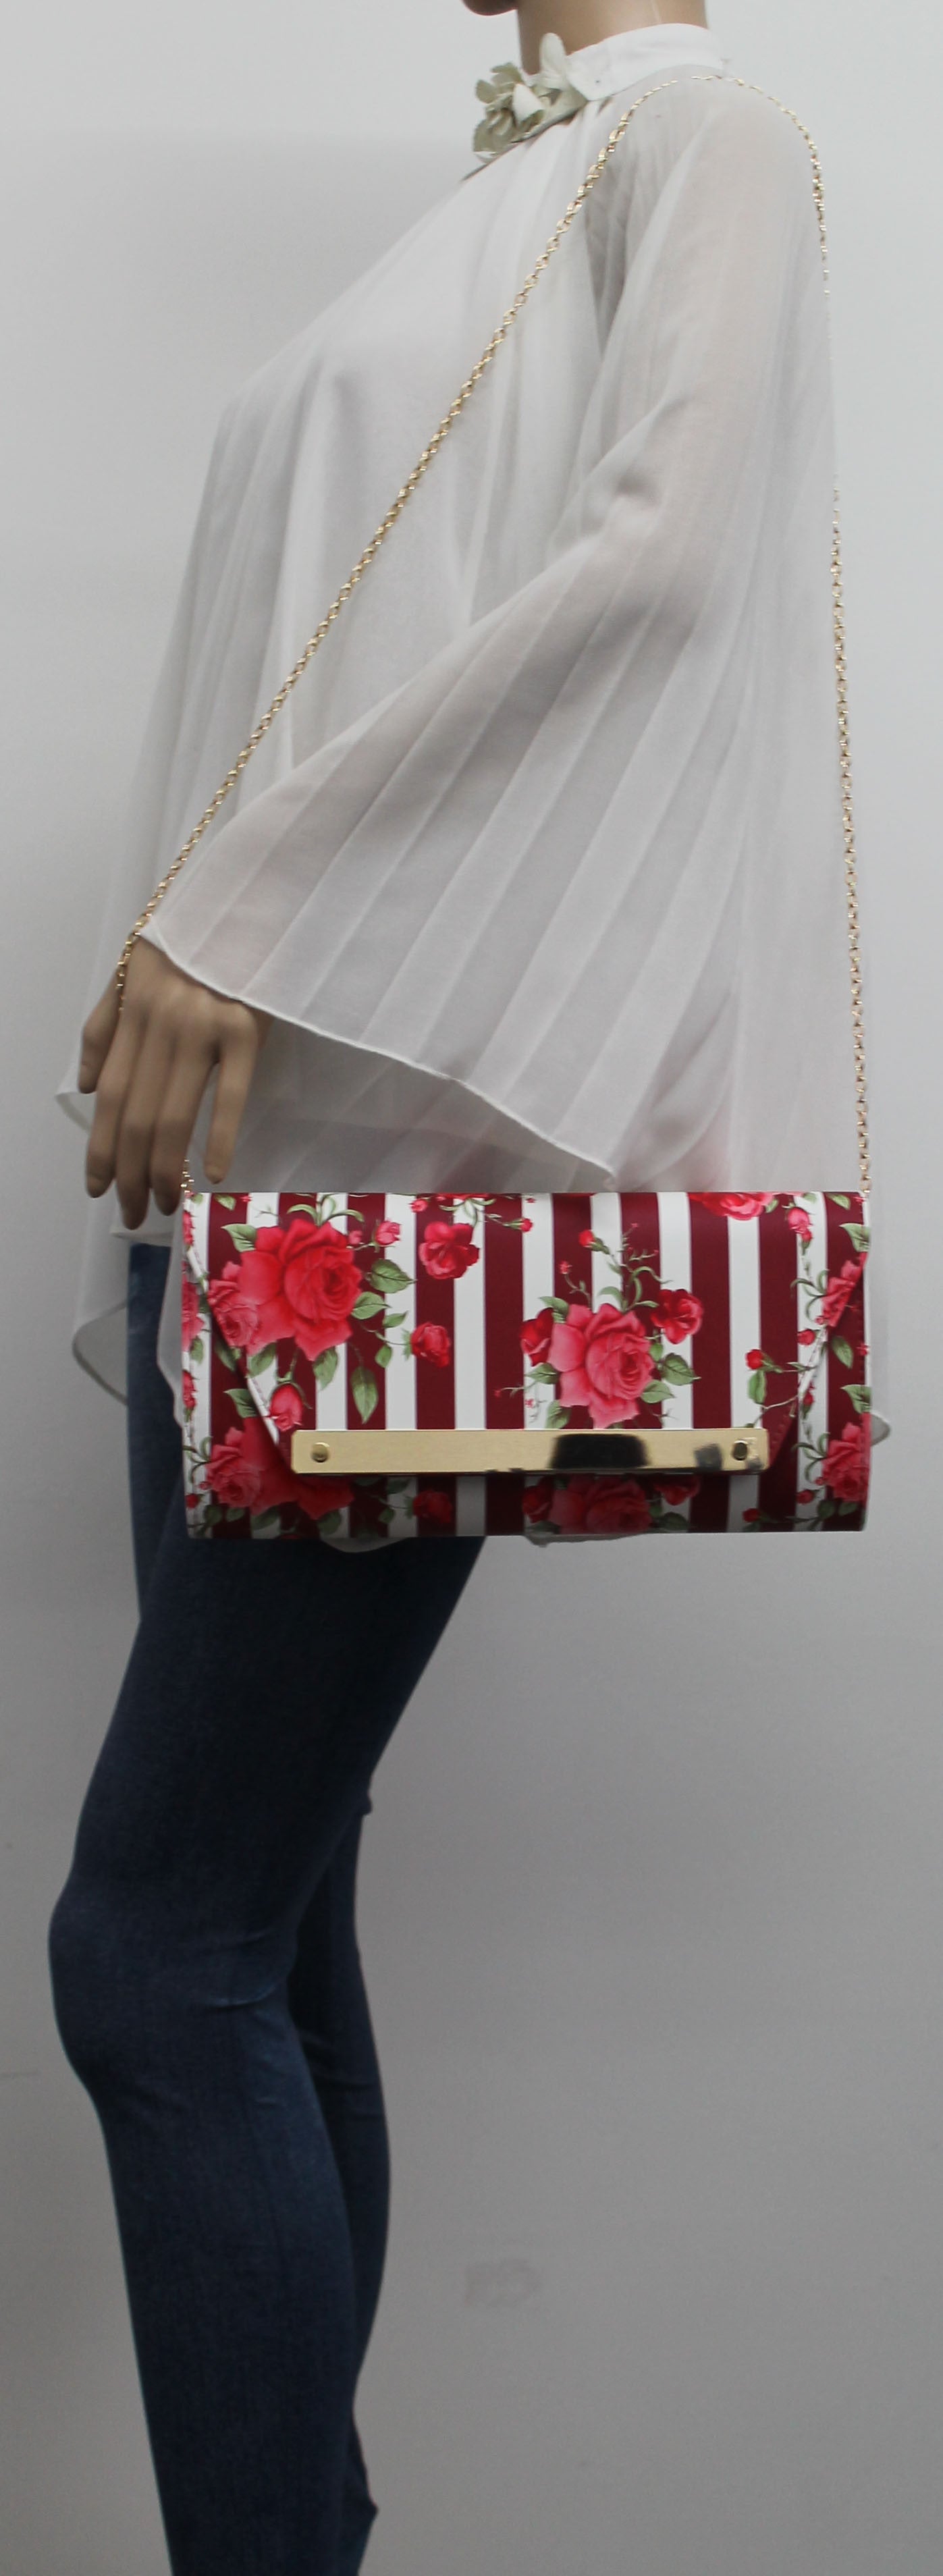 SWANKYSWANS Nicole Stripey Clutch Bag Red Cute Cheap Clutch Bag For Weddings School and Work